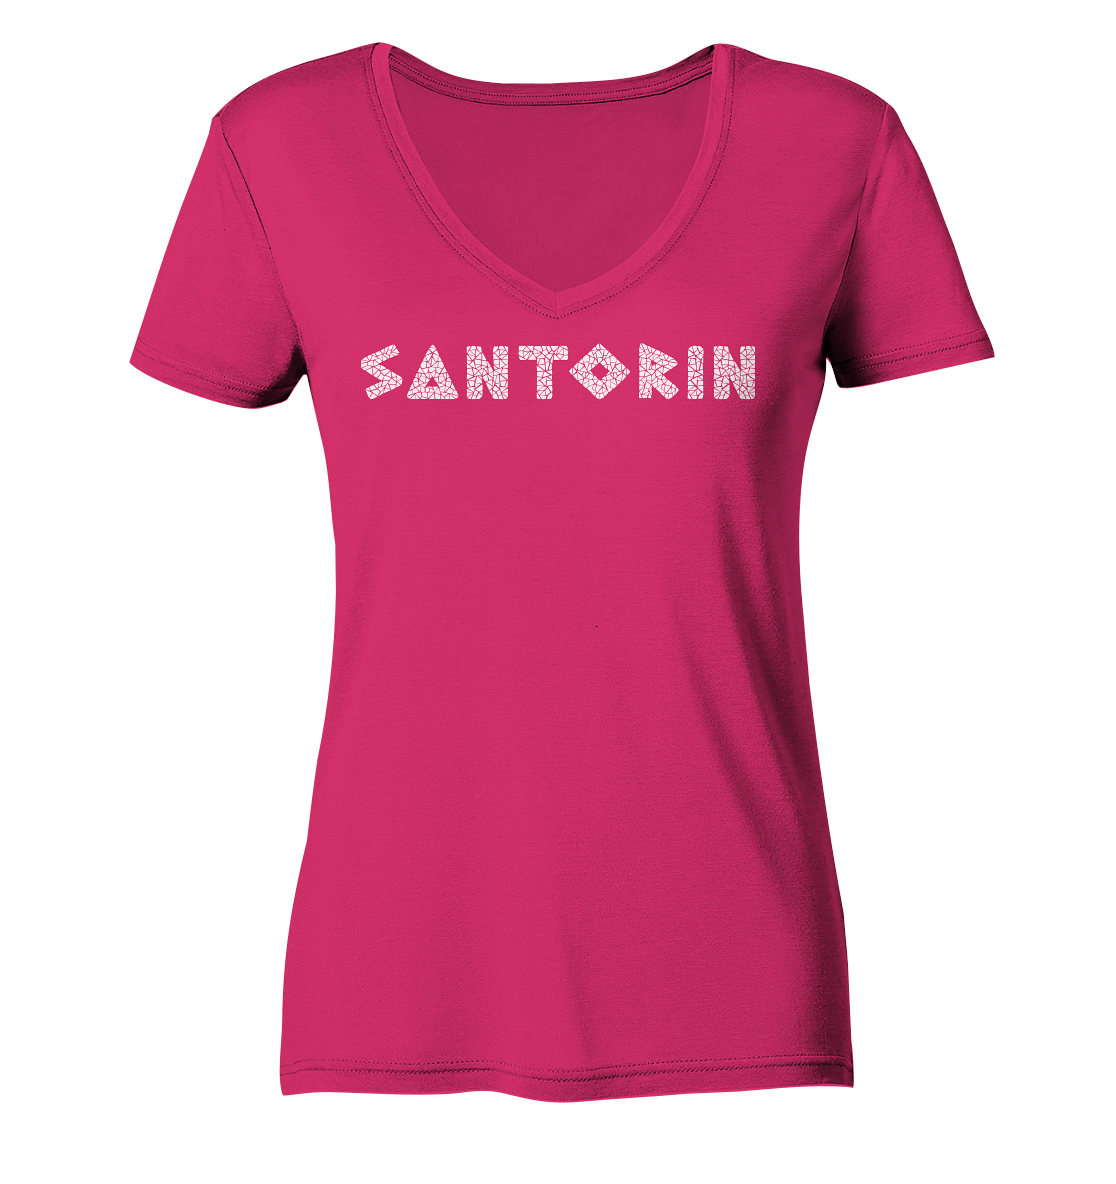 Santorini Mosaic - Ladies Organic V-Neck Shirt